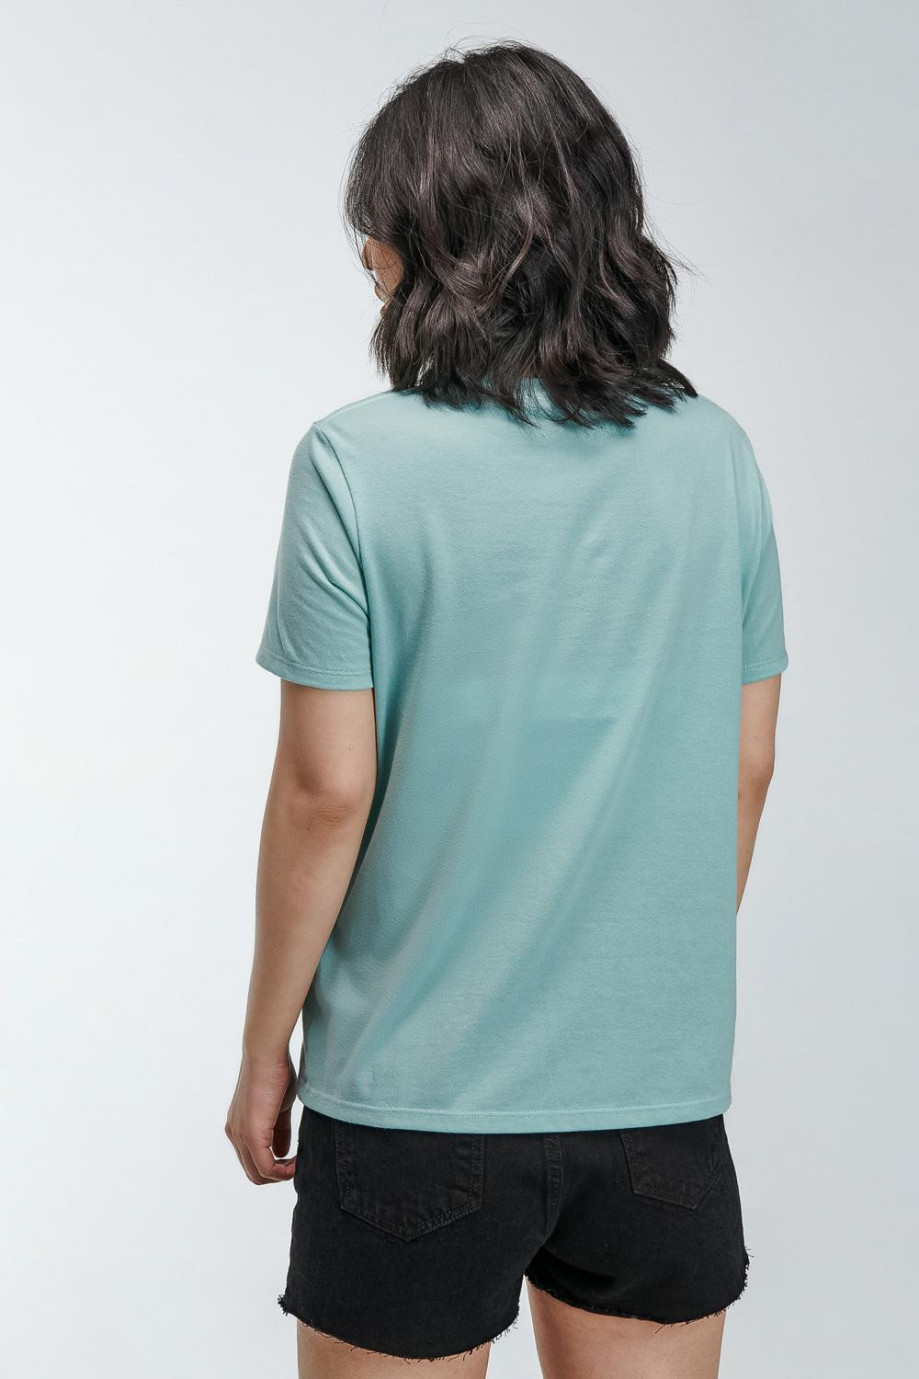 Camiseta manga corta con estampado en frente.